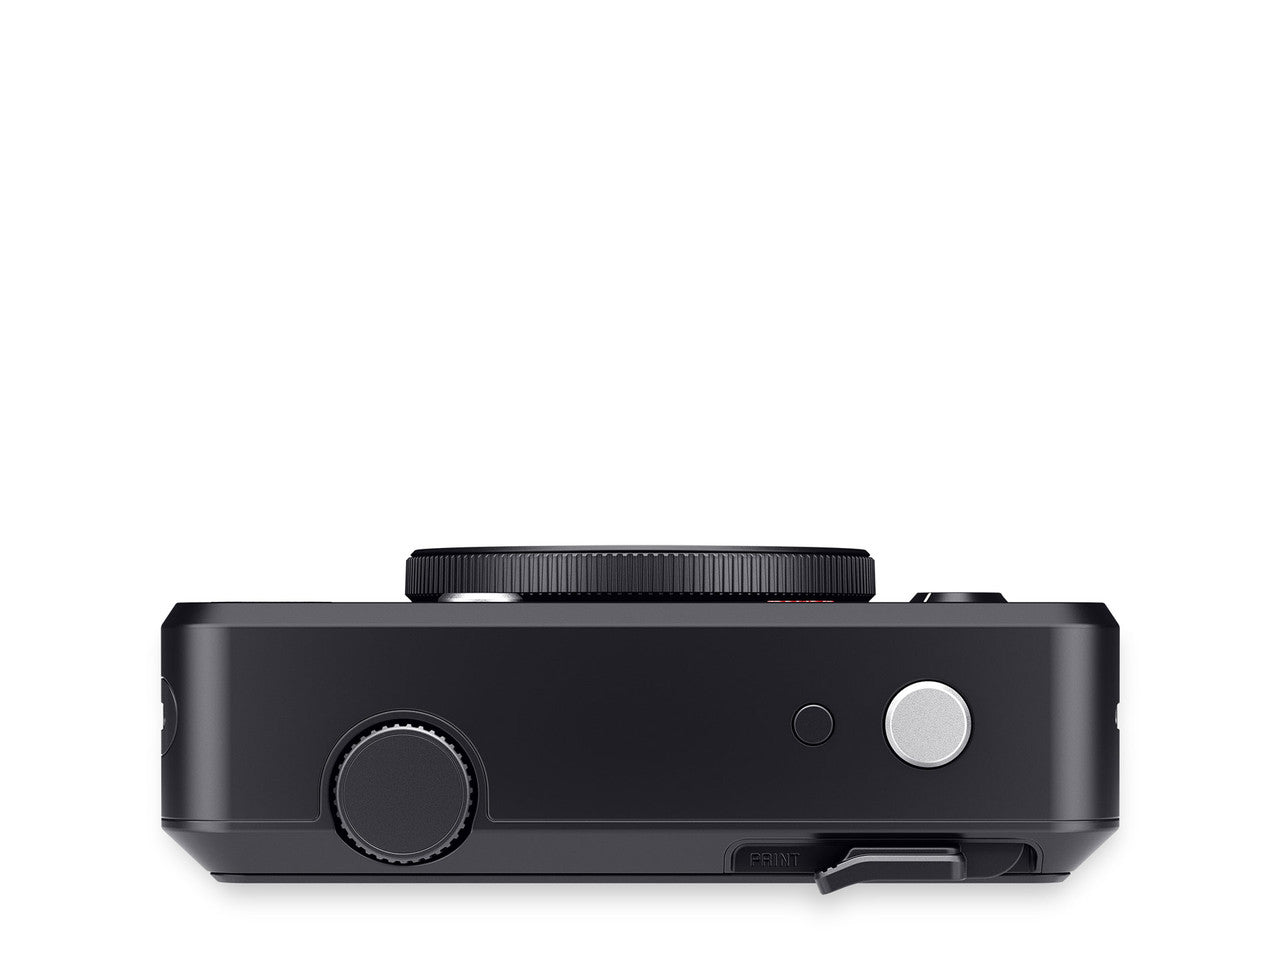 Leica SOFORT 2 Black - B&C Camera